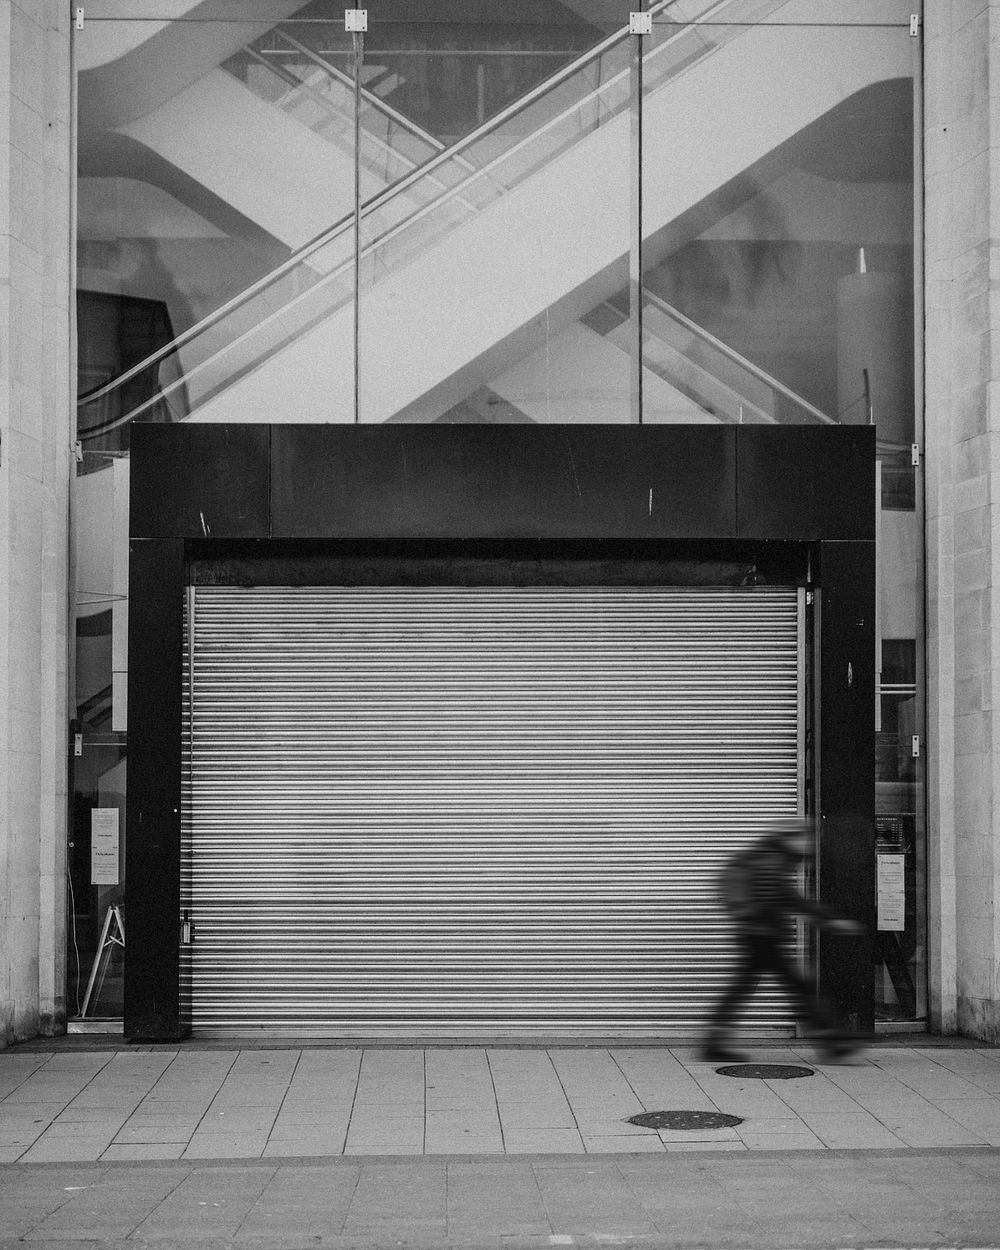 Mall closed due to Covid-19 outbreak. BRISTOL, UK, March 30, 2020